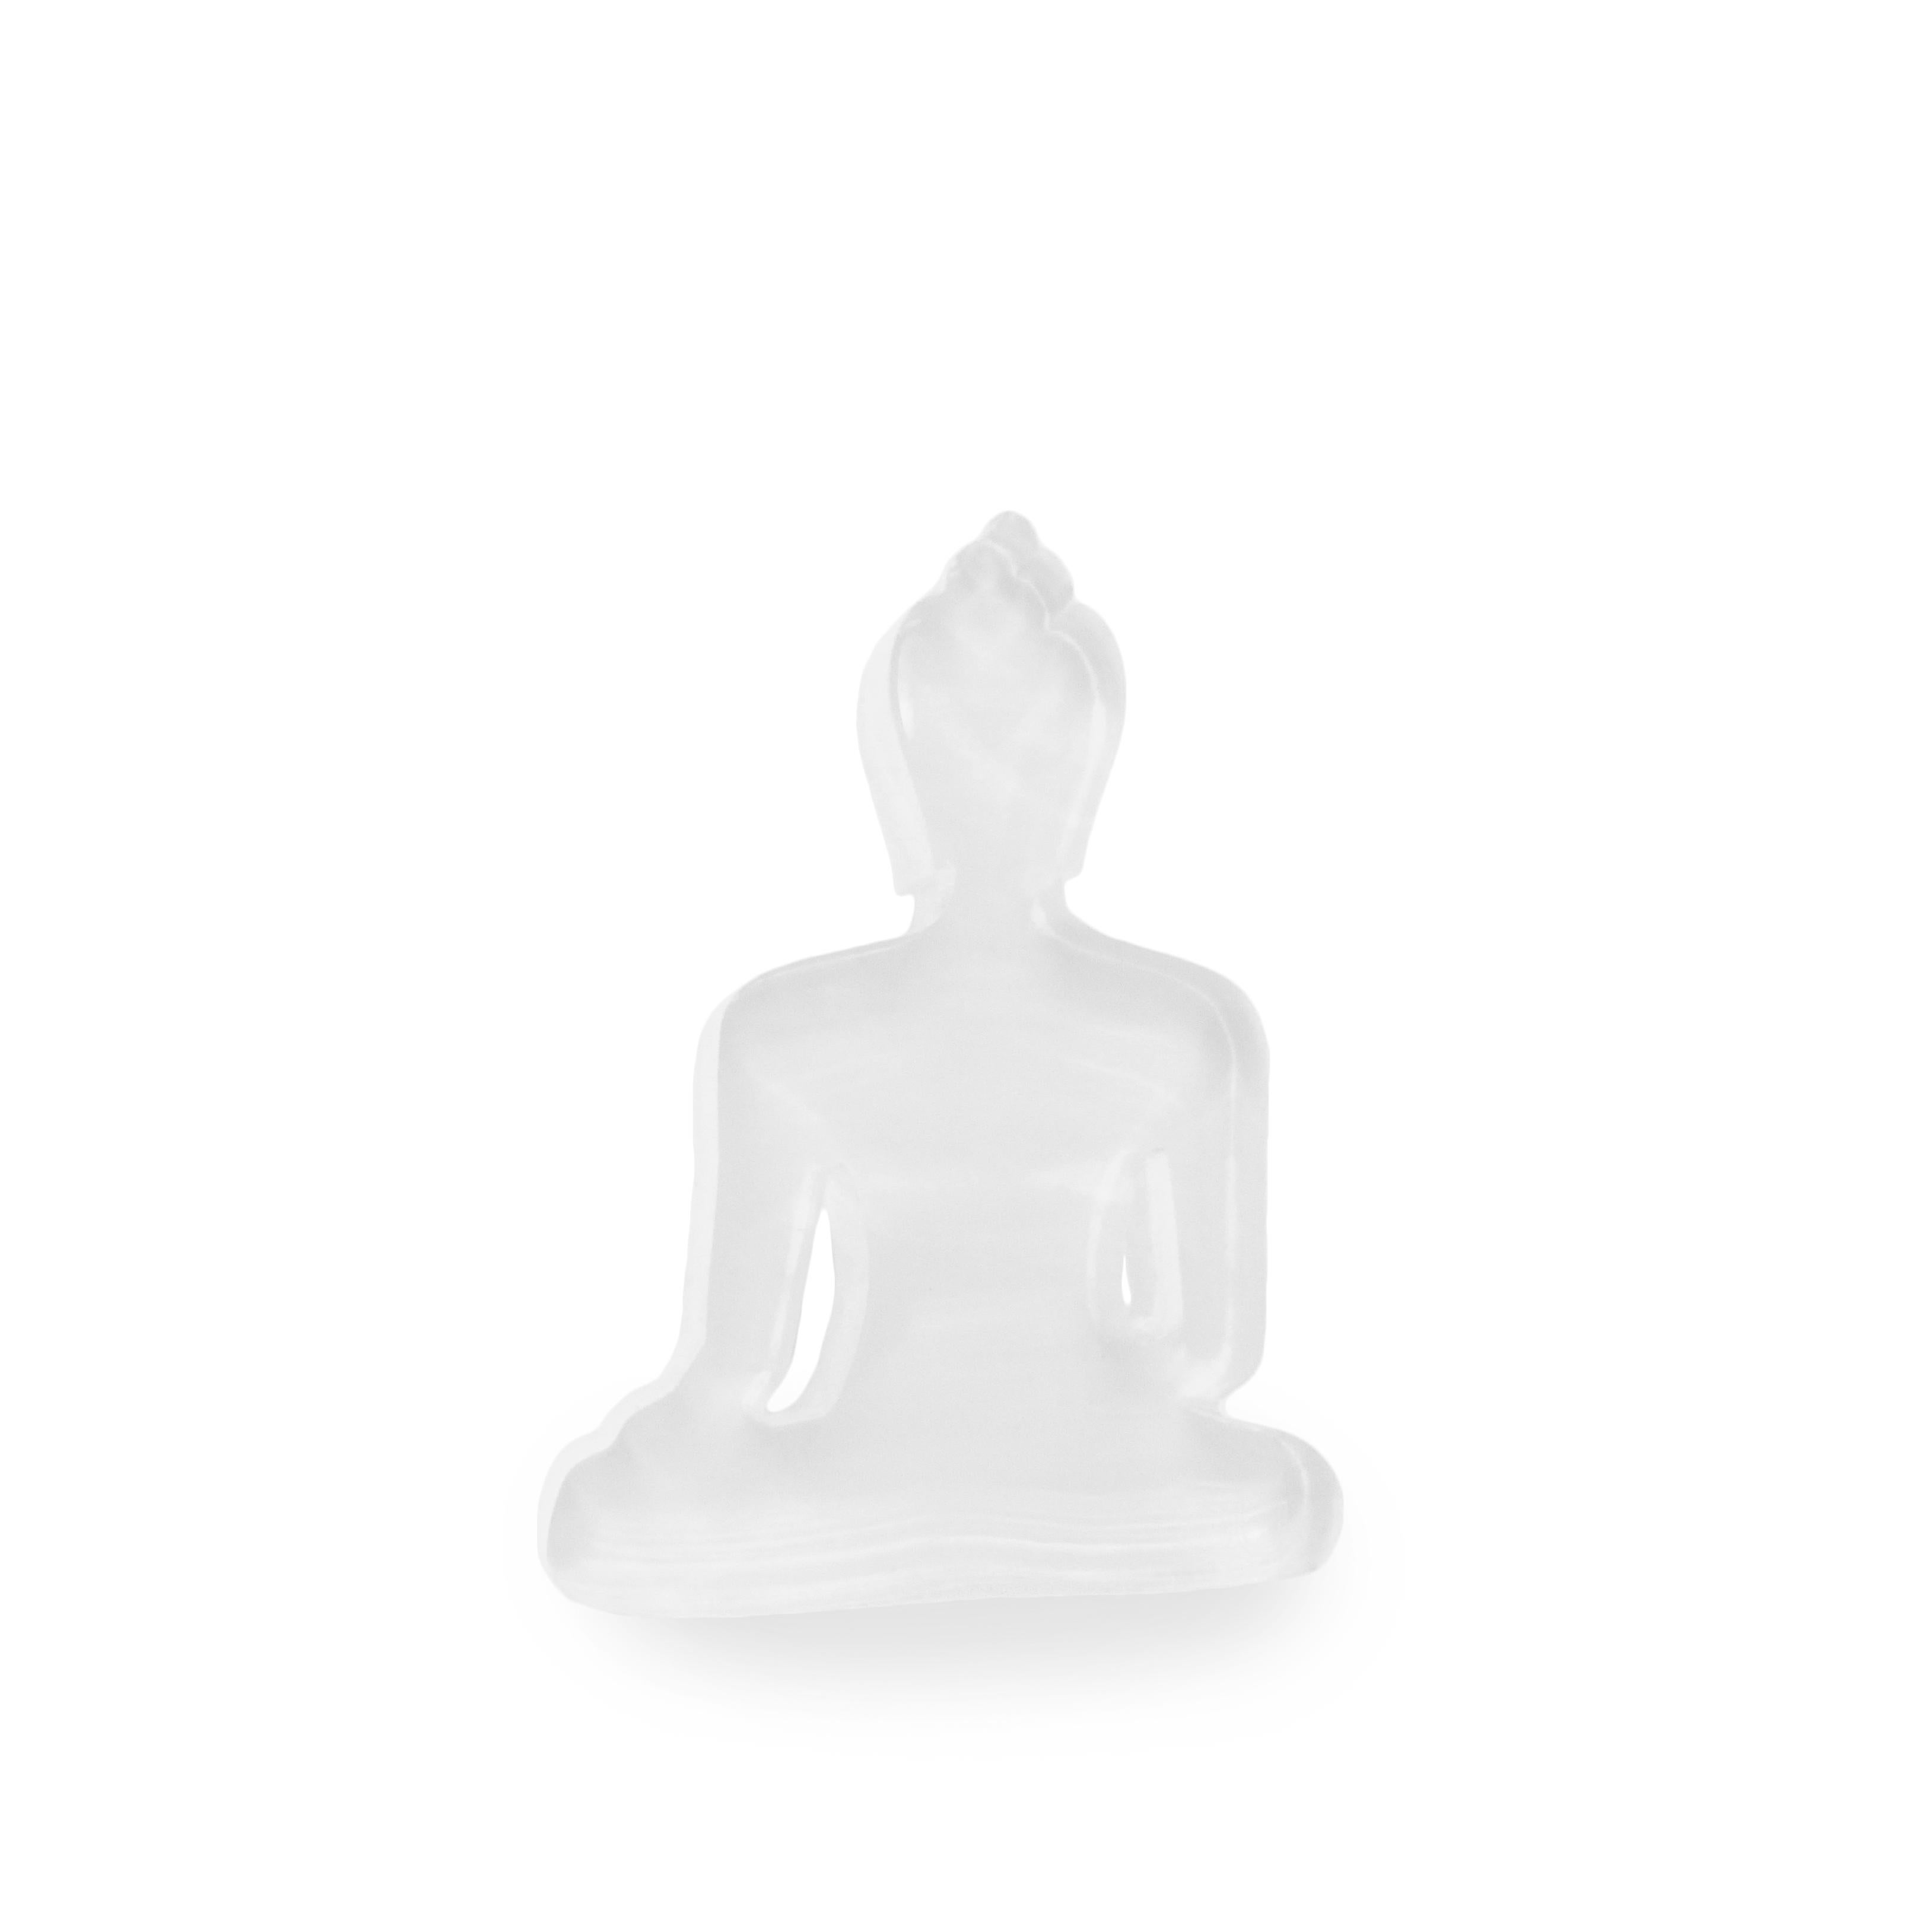 Tal Nehoray Figurative Sculpture - White mini buddha, Plexiglas, hand painted 